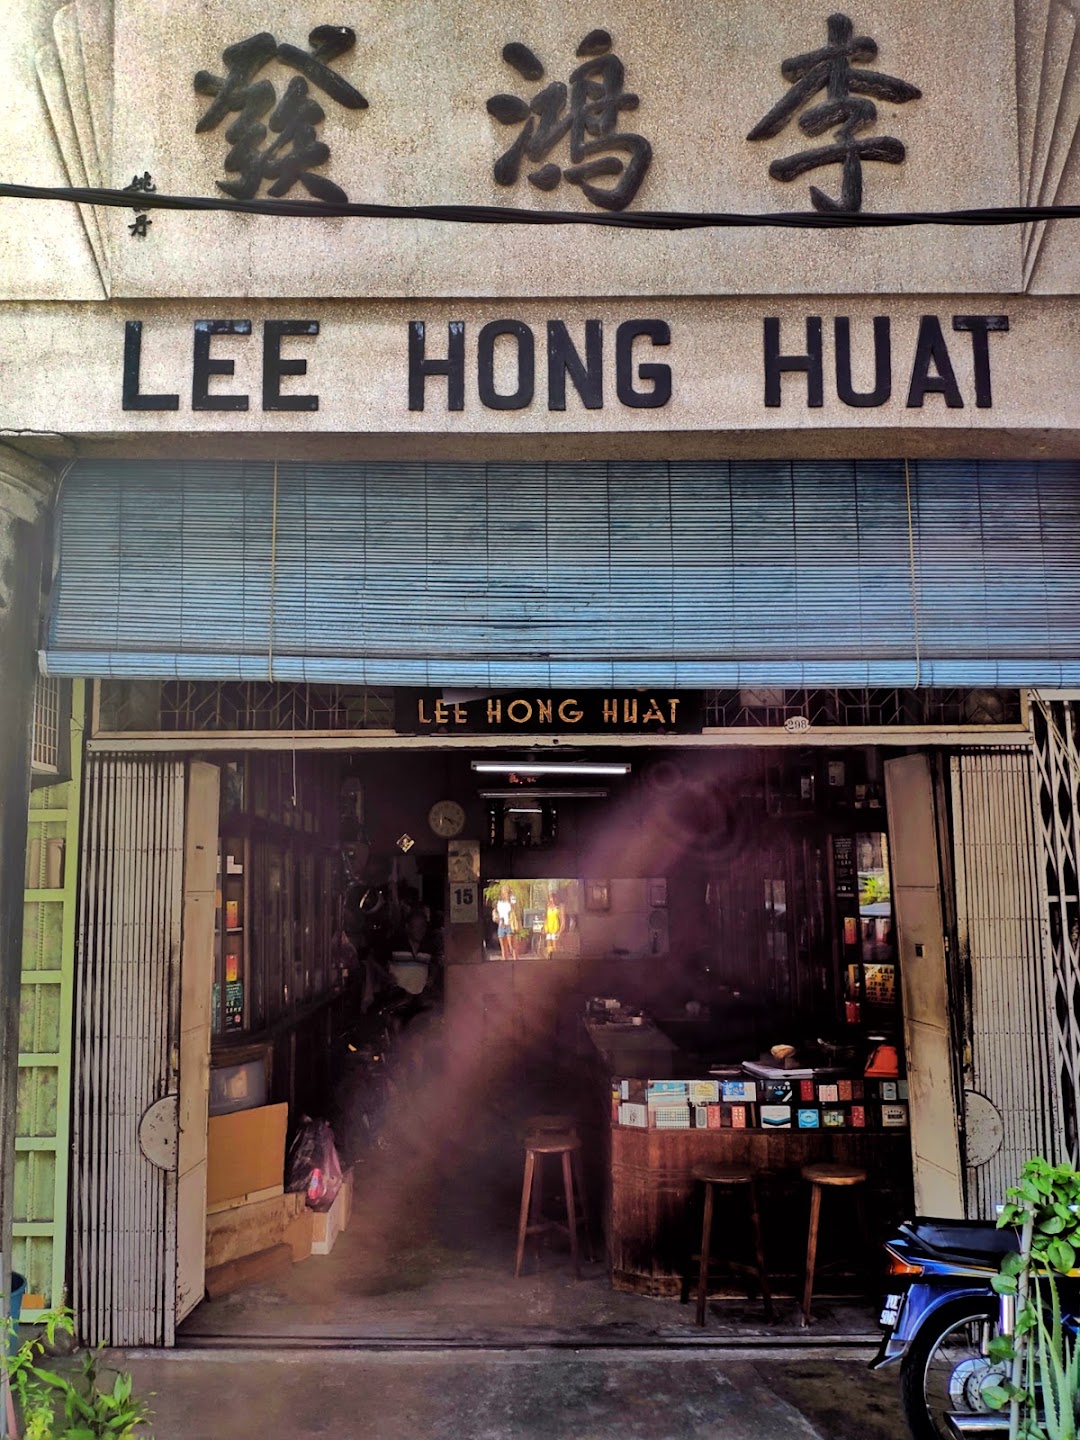 Lee Hong Huat